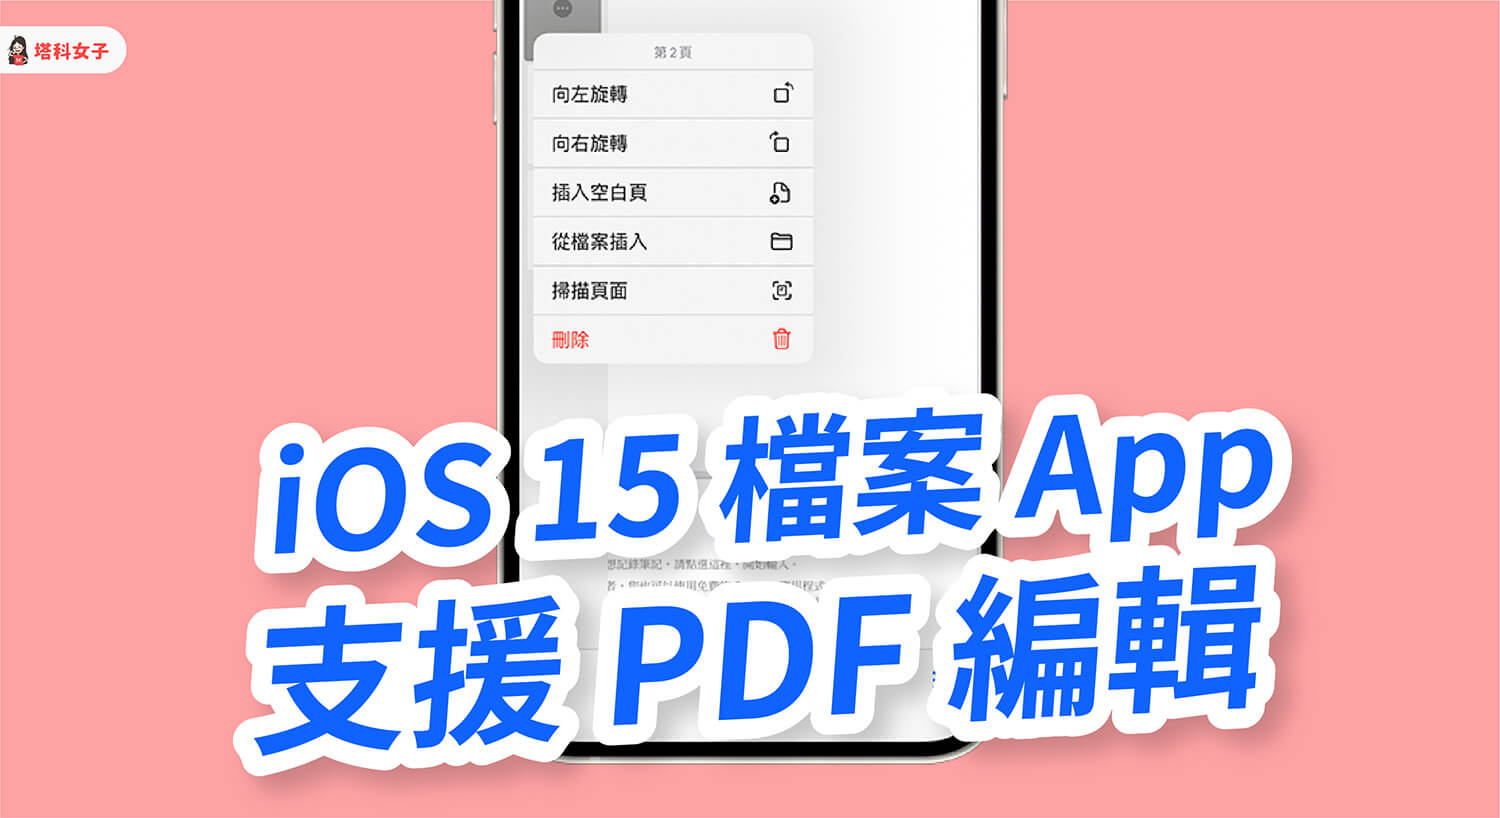 iOS 15 檔案 App 編輯 PDF